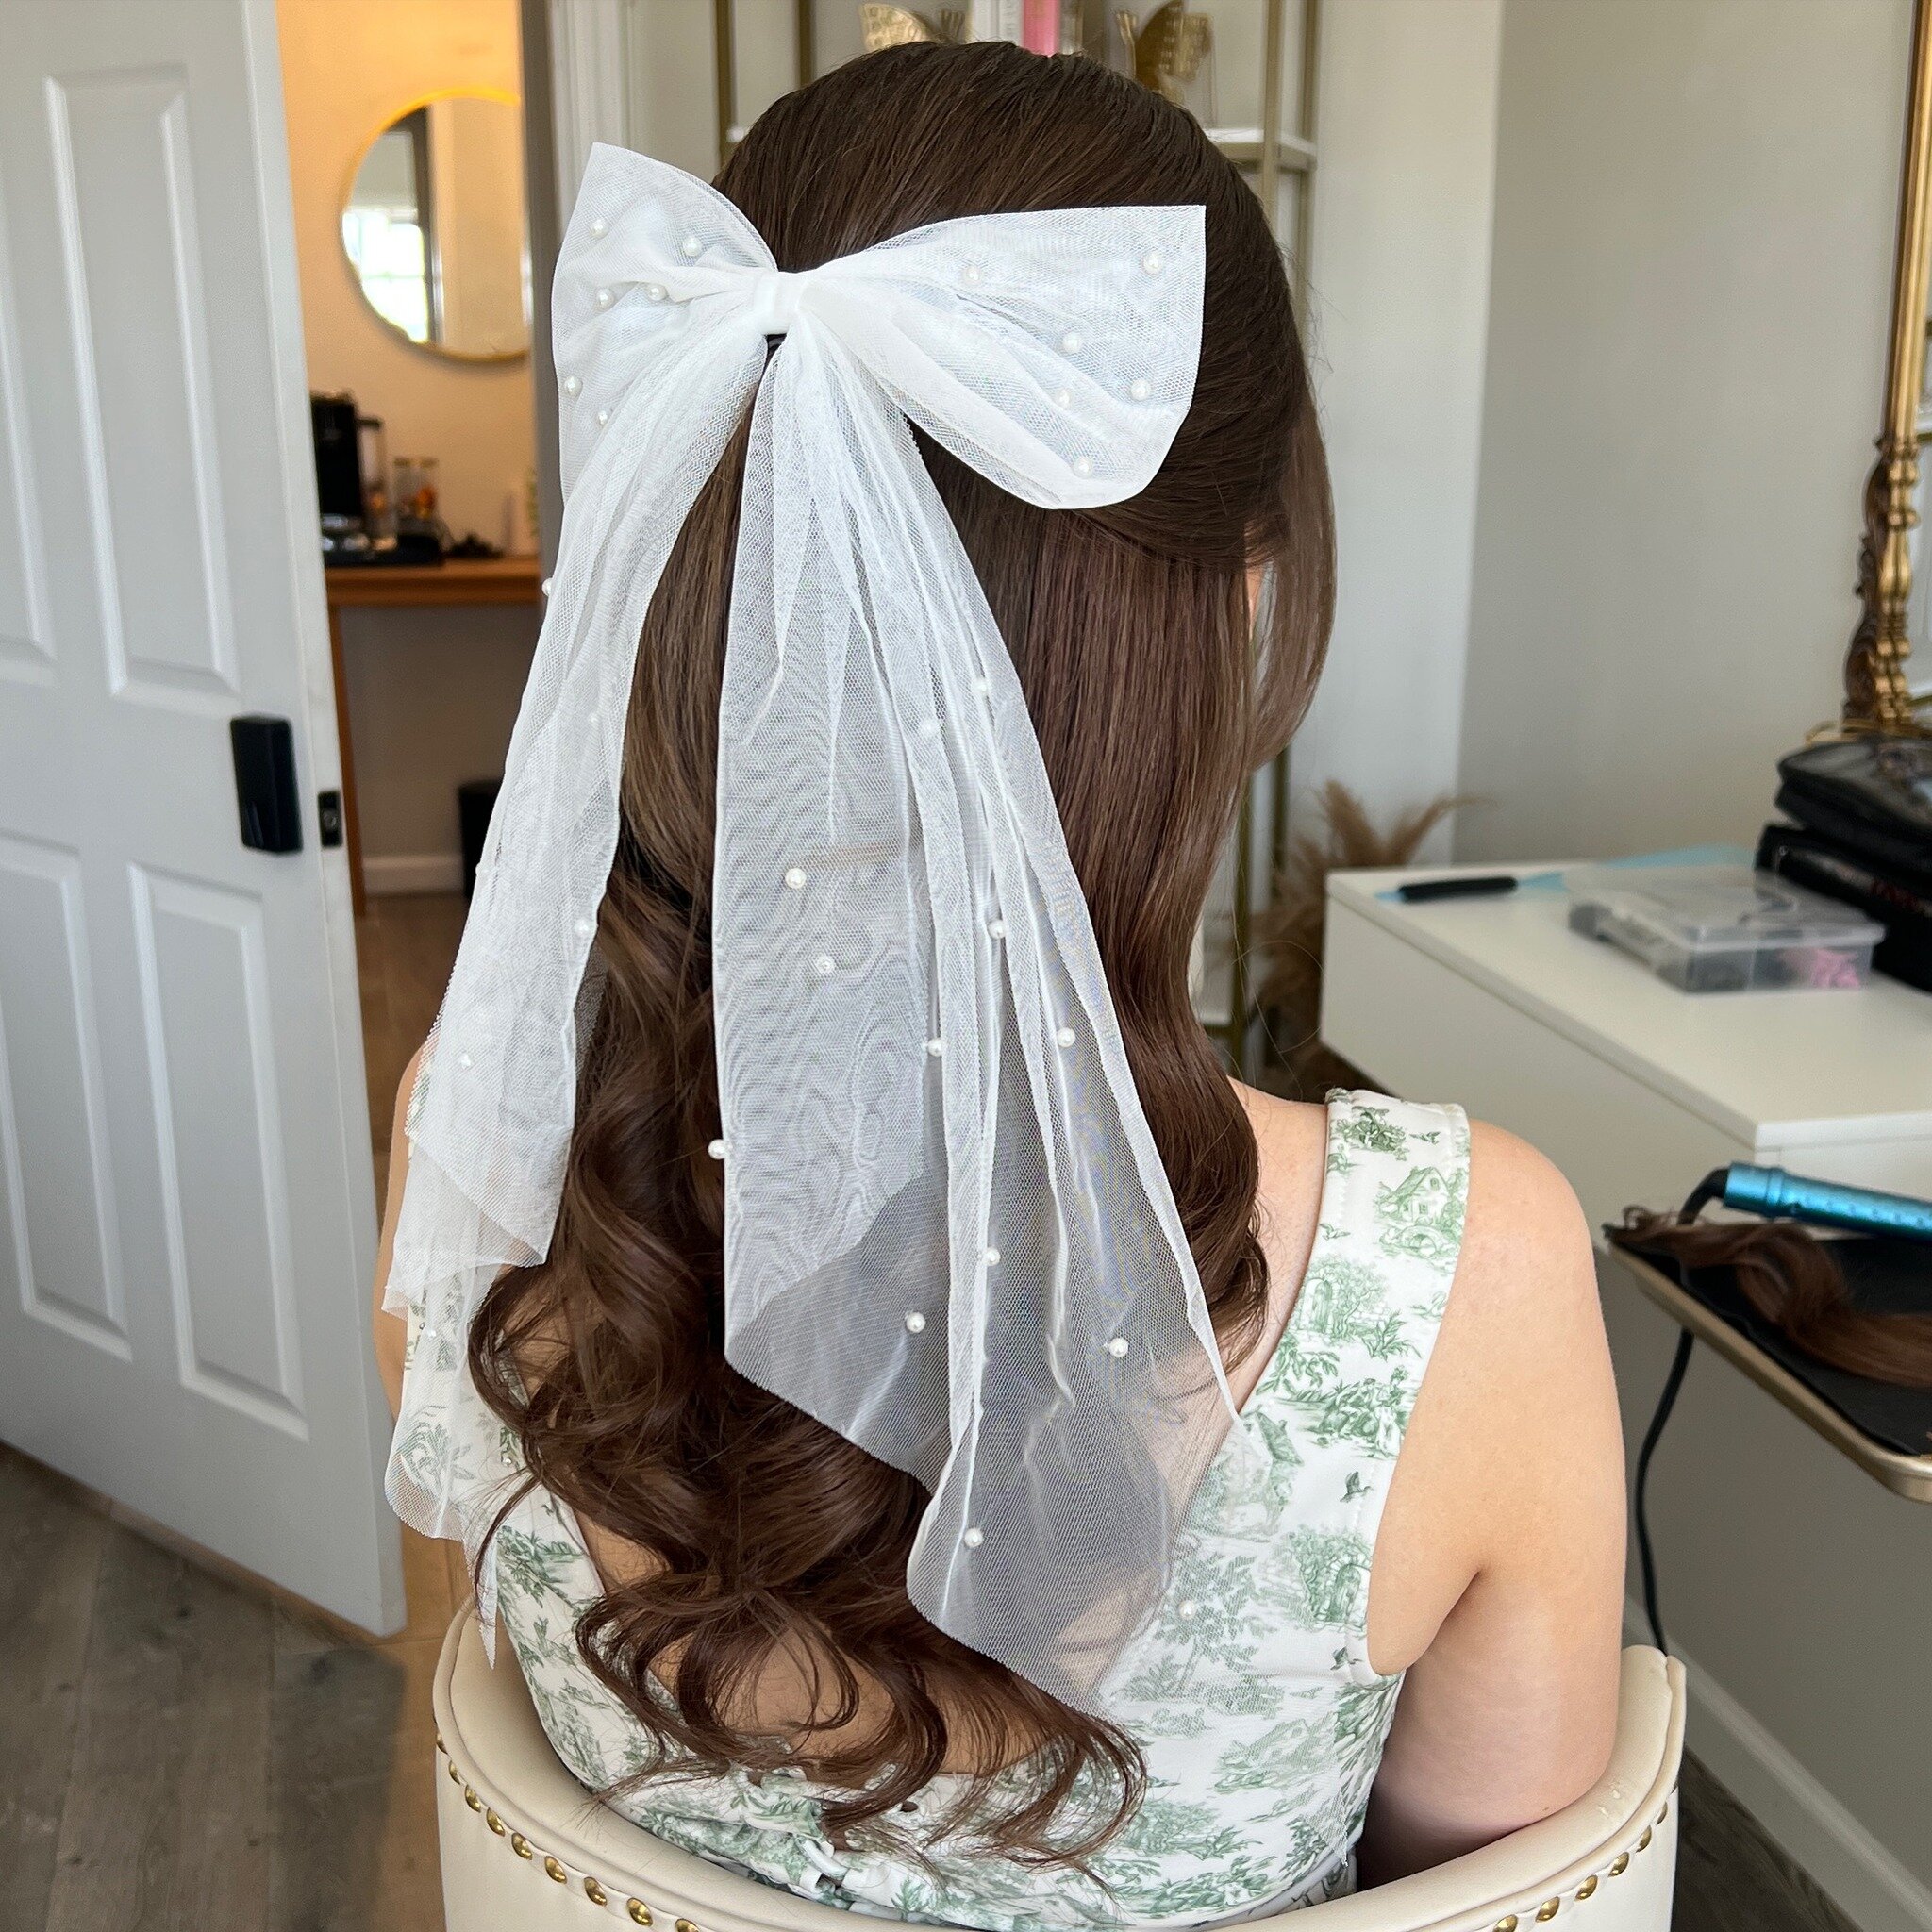 Modern coquette bow bridal style 
Hair by LYS Artist Azlin 
#themodernbride #bow #losangeleshairstylist #bridalartist #losangelesbridalmakeupartist